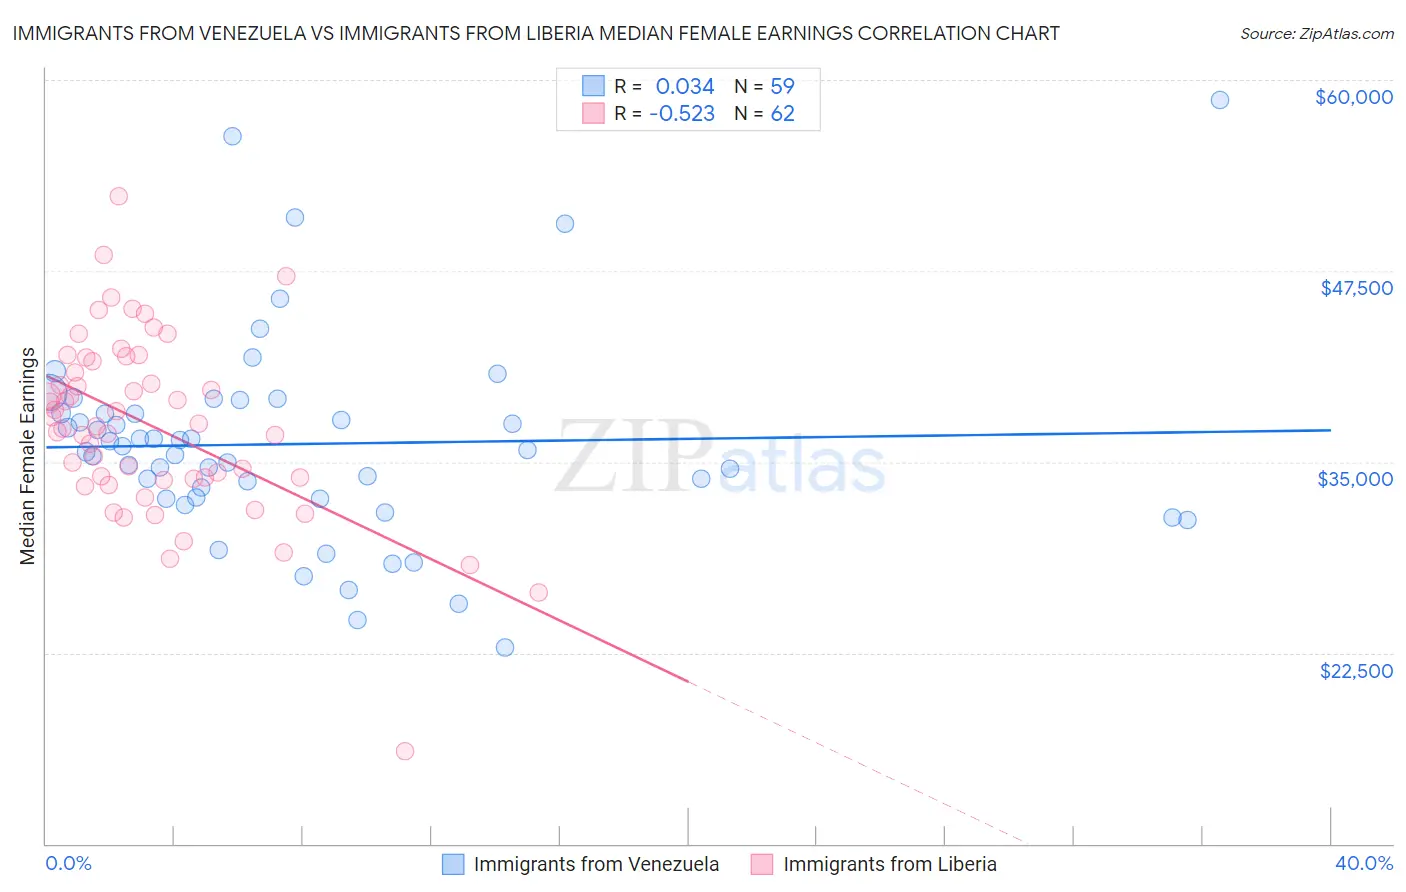 Immigrants from Venezuela vs Immigrants from Liberia Median Female Earnings